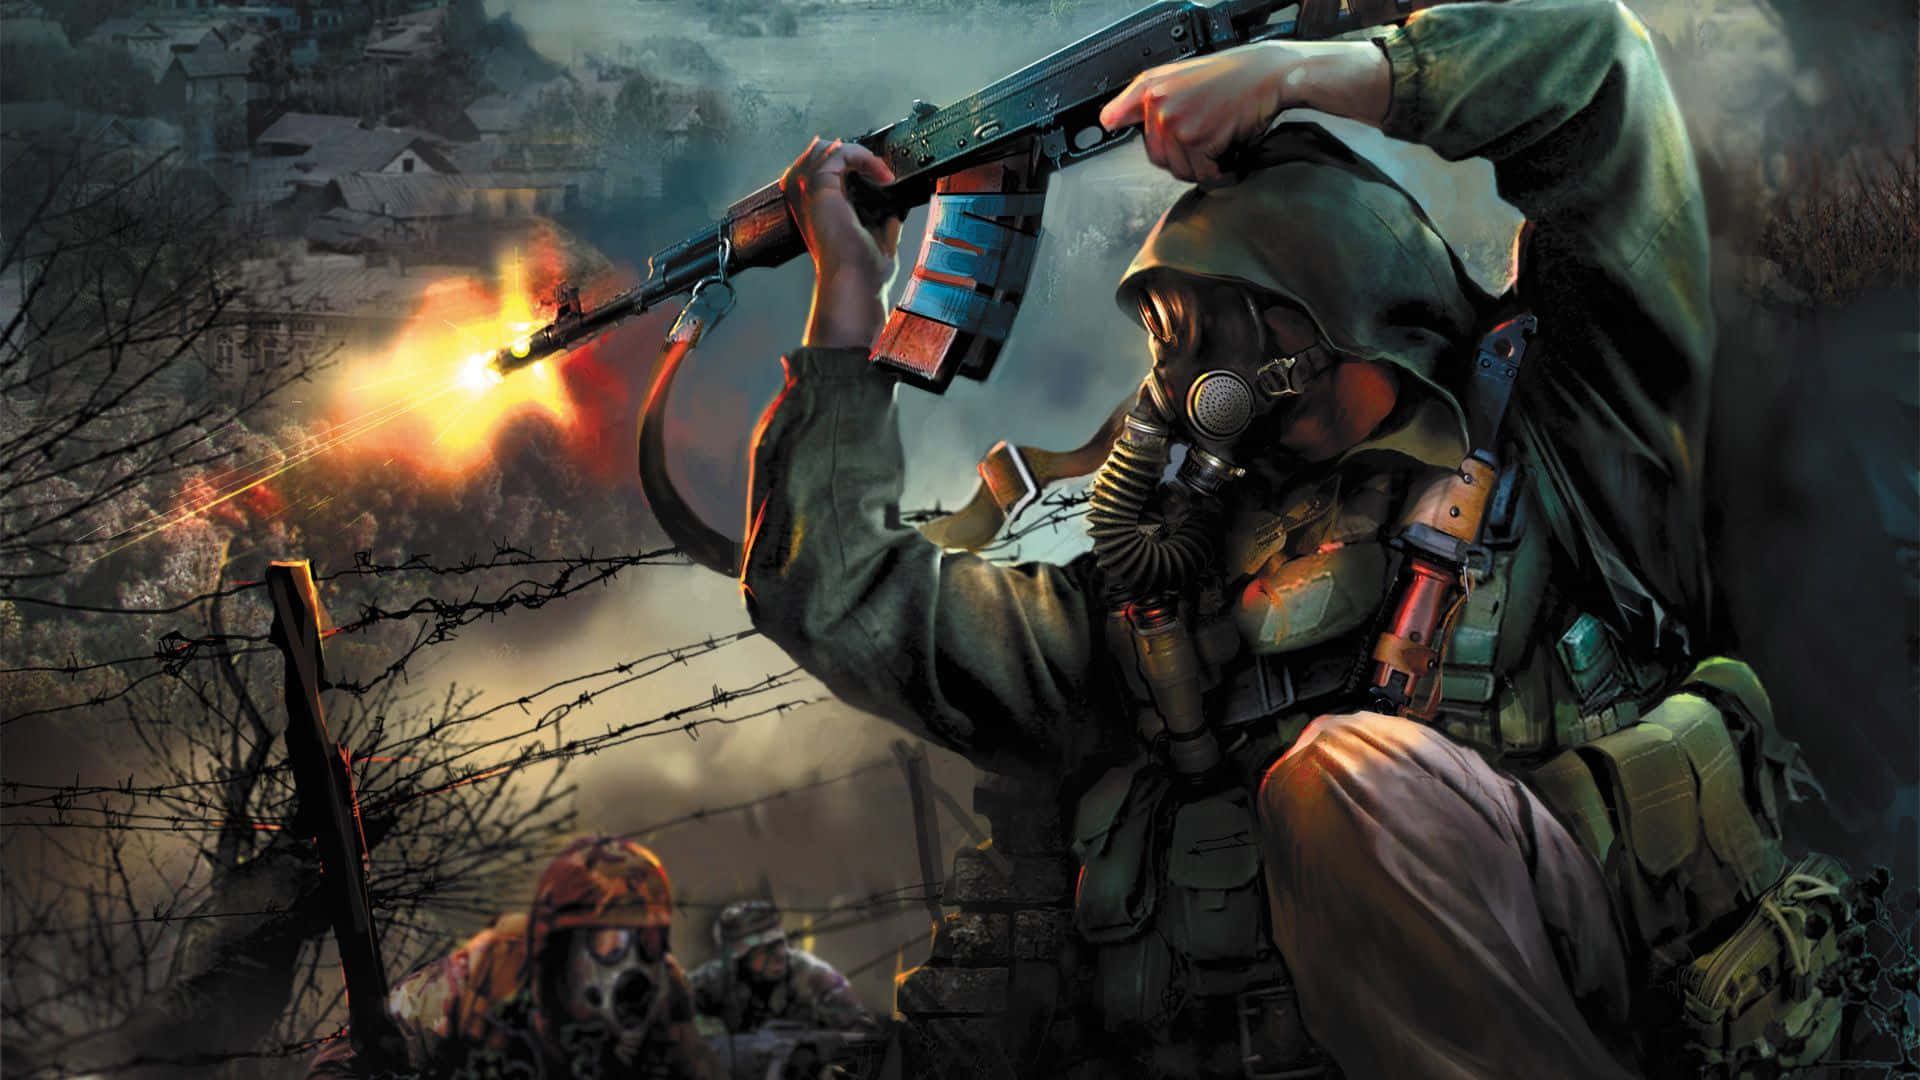 Intense War Games Action - Soldiers Engaging in Virtual Battles Wallpaper